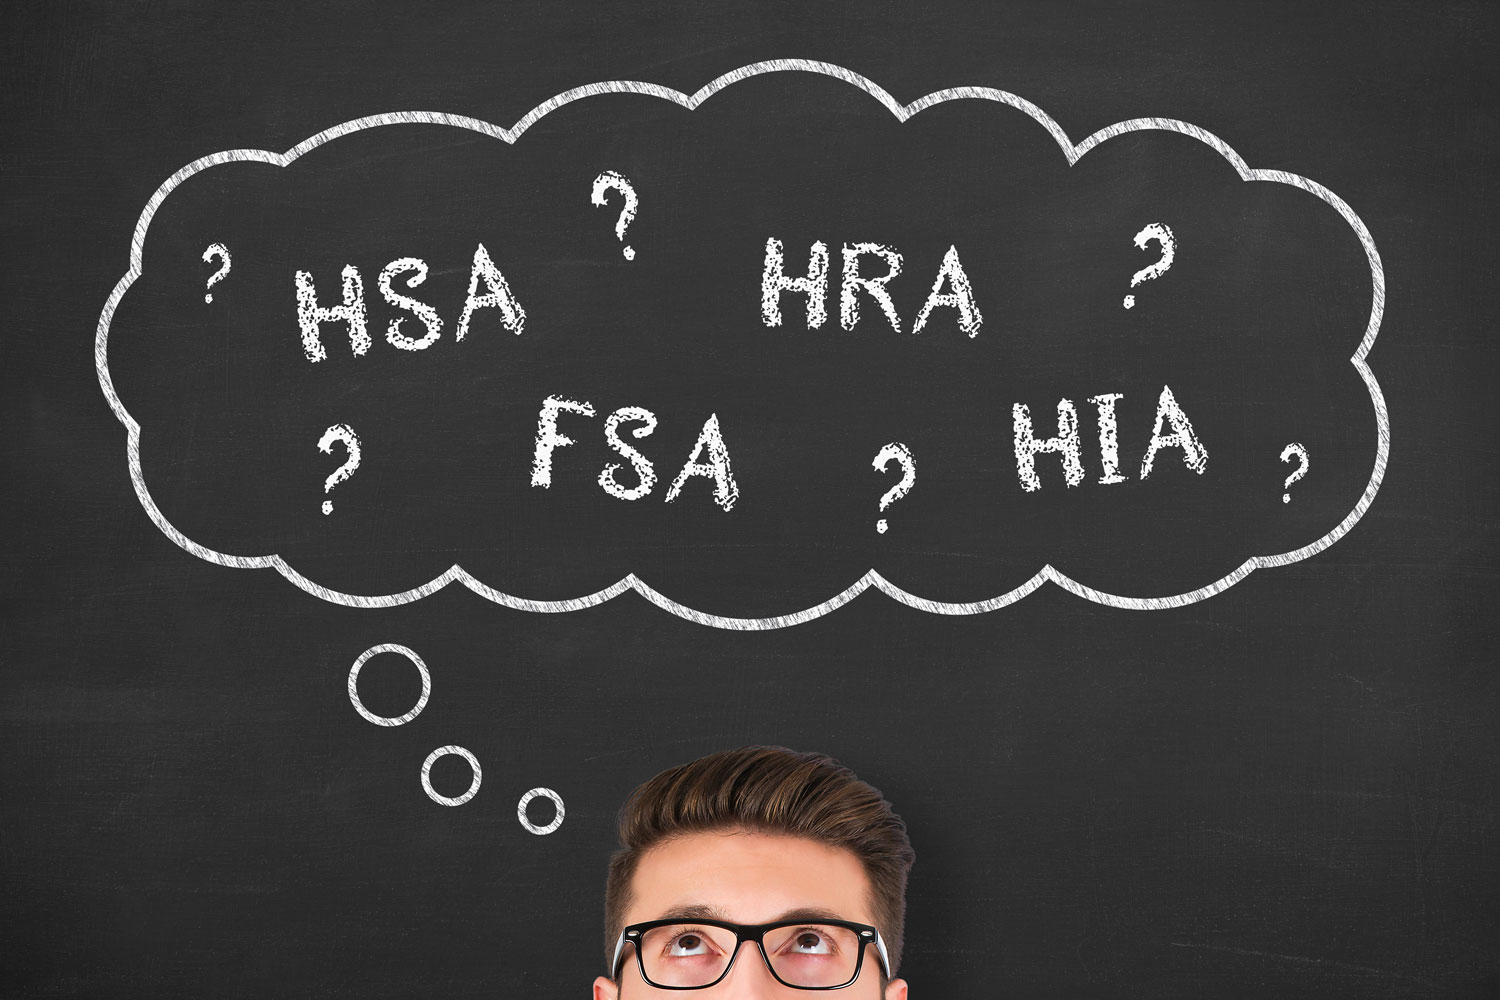 HRA Basics: Contributions, Expenses, Reimbursements